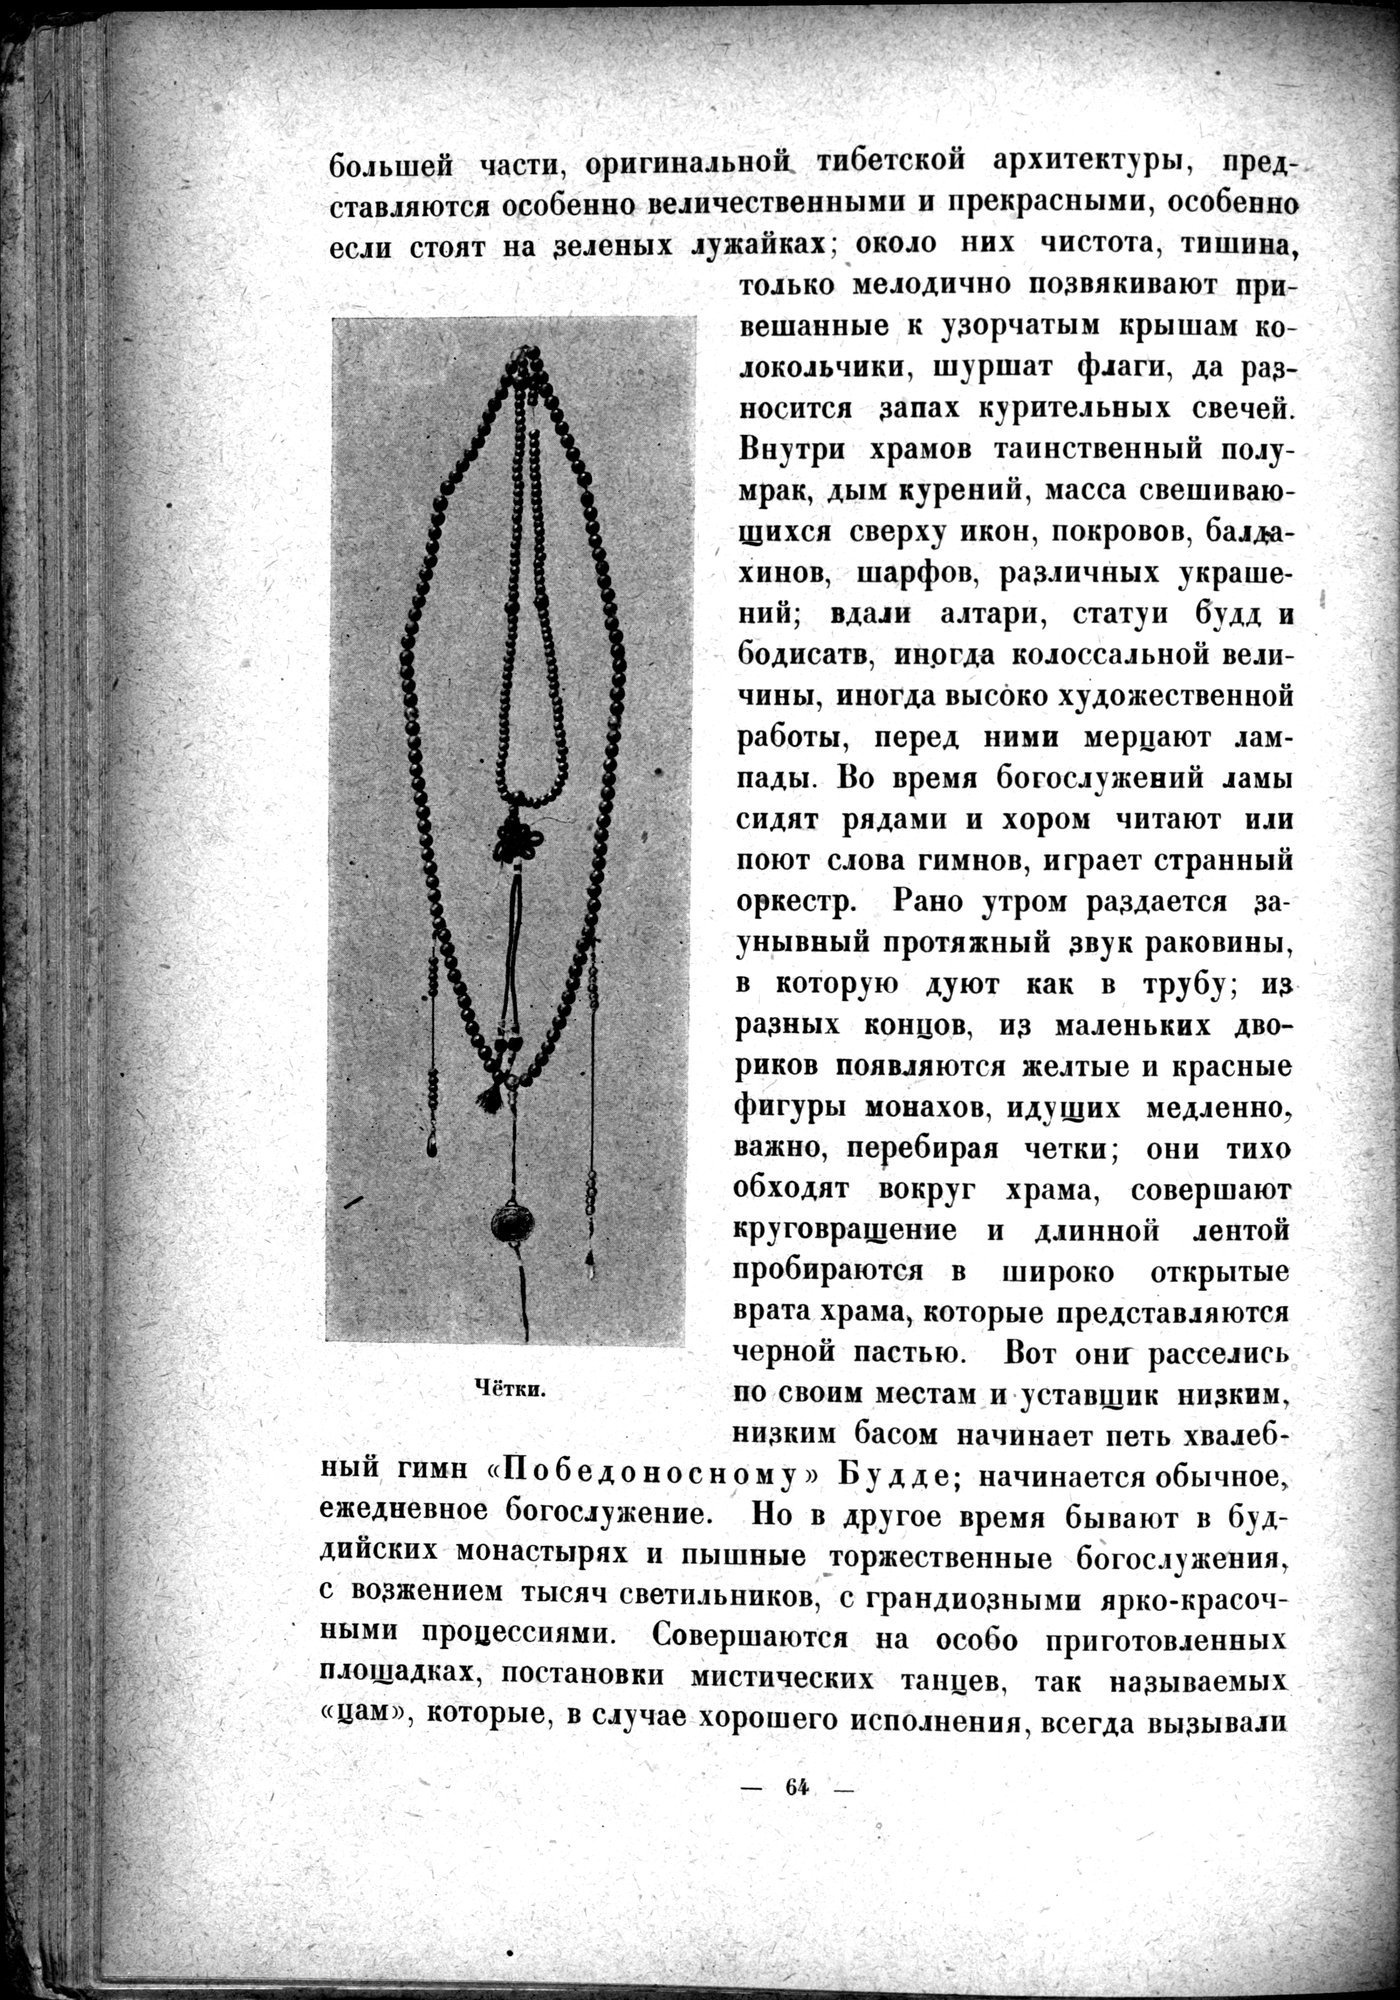 Mongoliya i Amdo i mertby gorod Khara-Khoto : vol.1 / Page 88 (Grayscale High Resolution Image)